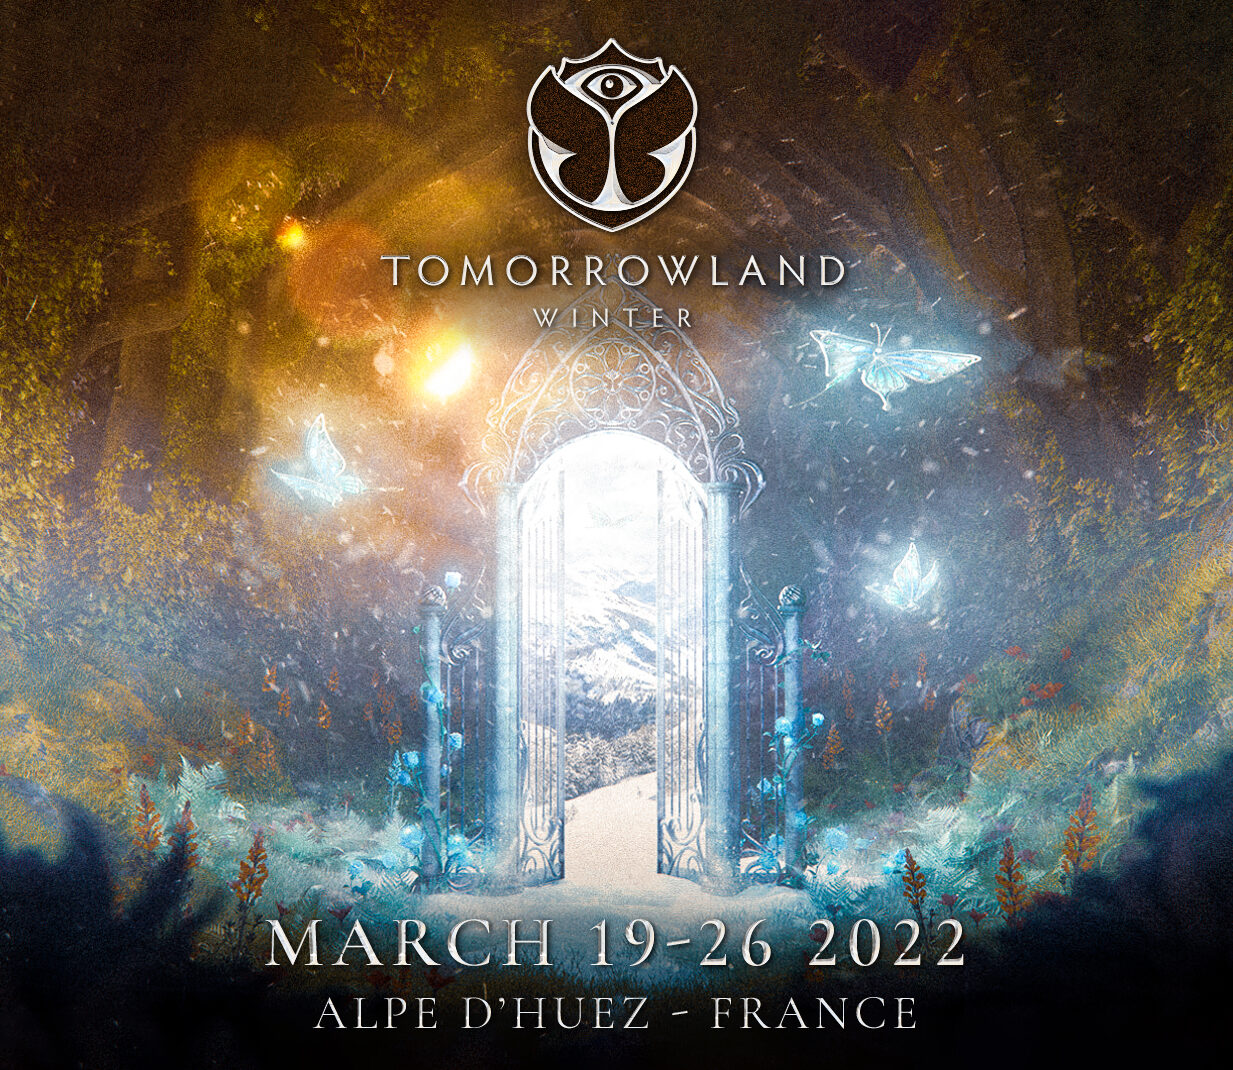 Tomorrowland Winter 2022